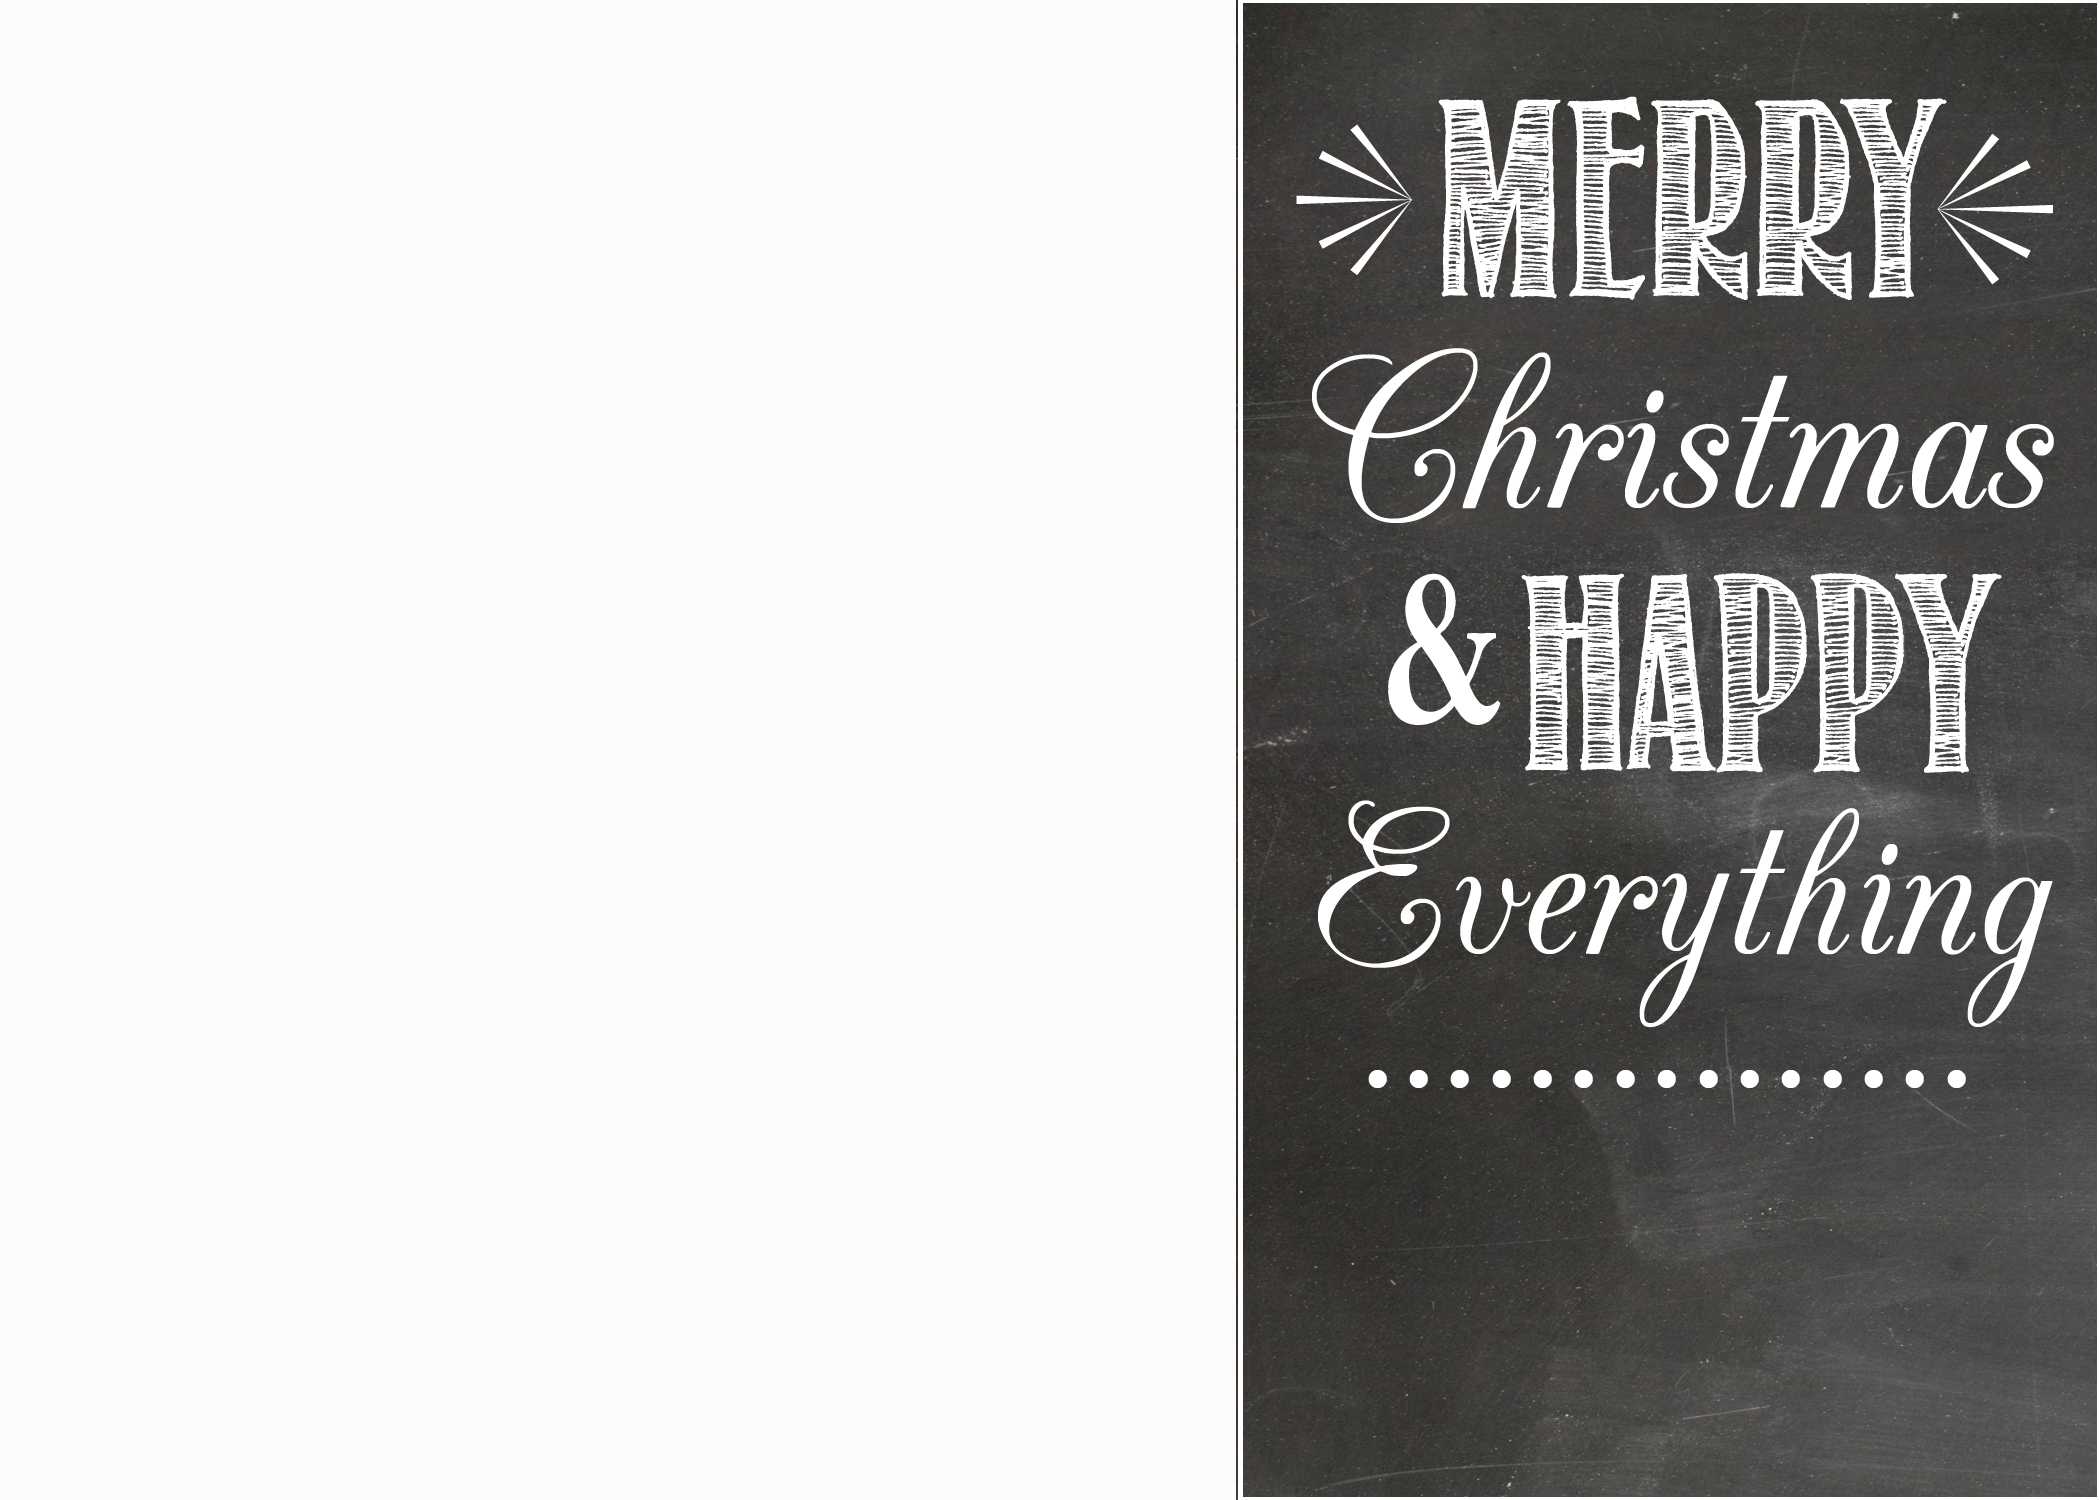 Free Chalkboard Christmas Card Templates | Oldsaltfarm Throughout Free Christmas Card Templates For Photoshop